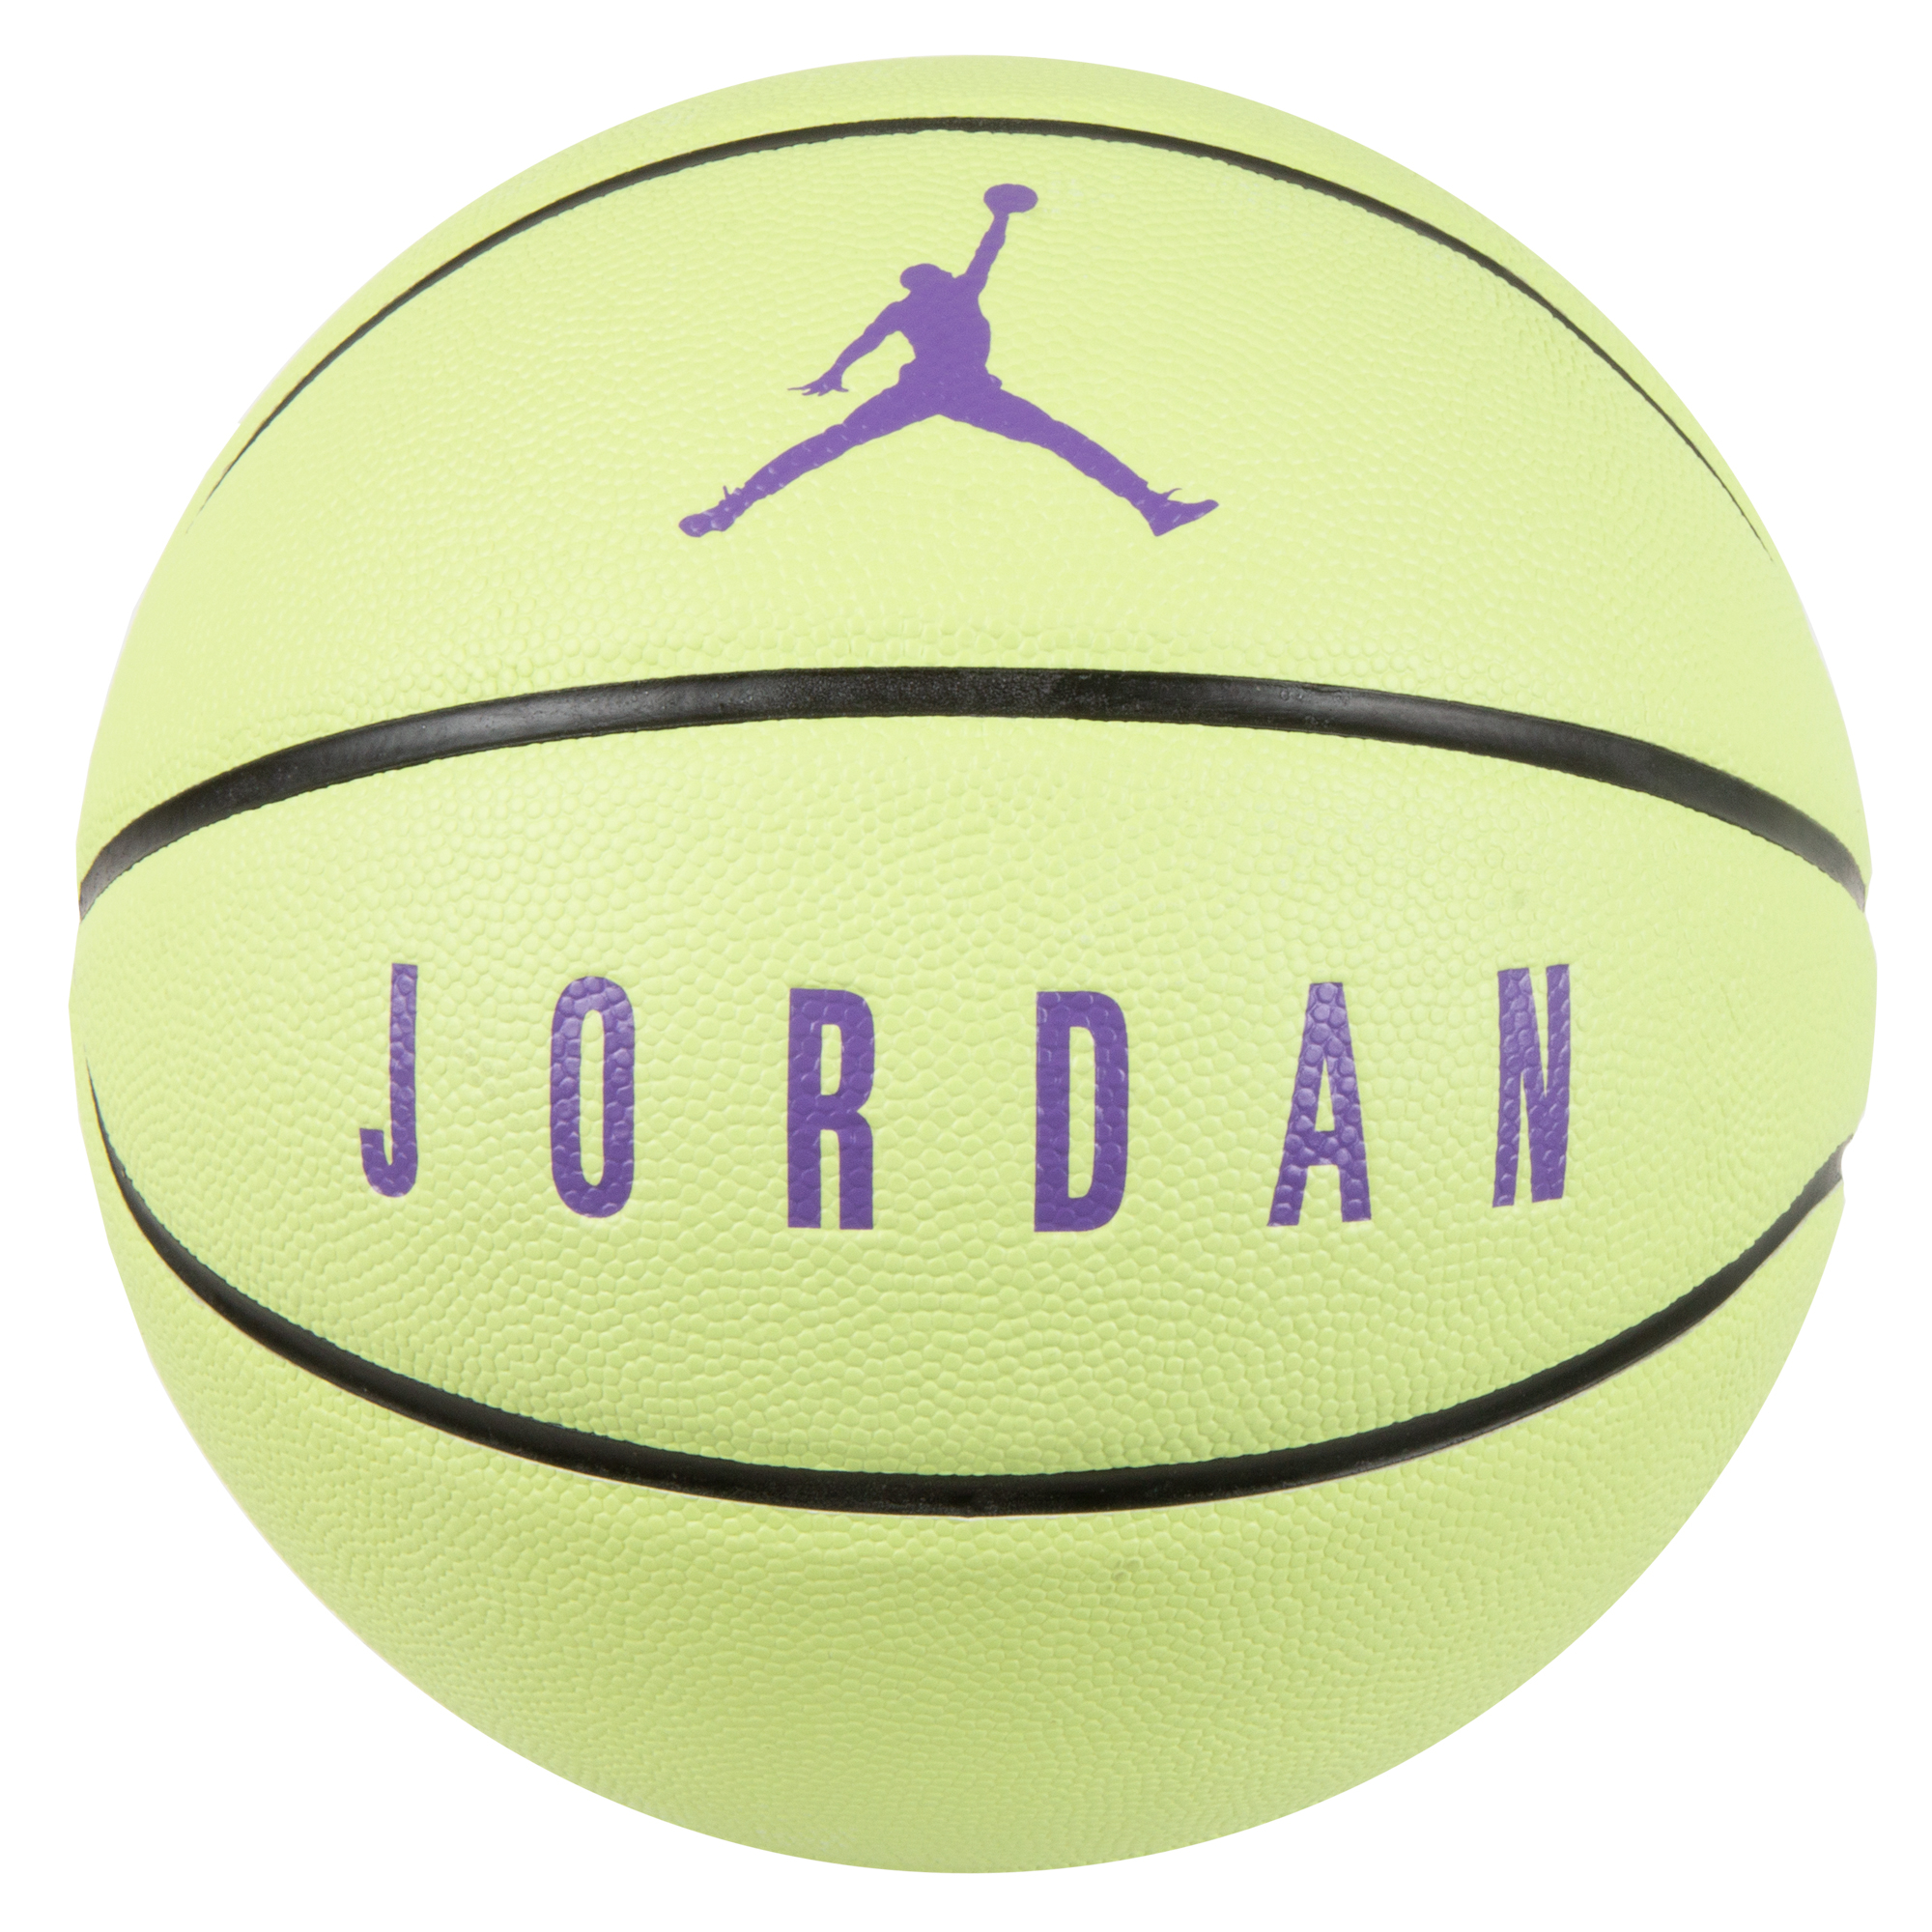 Ballon de basket-ball Nike Jordan Ultimate 8P